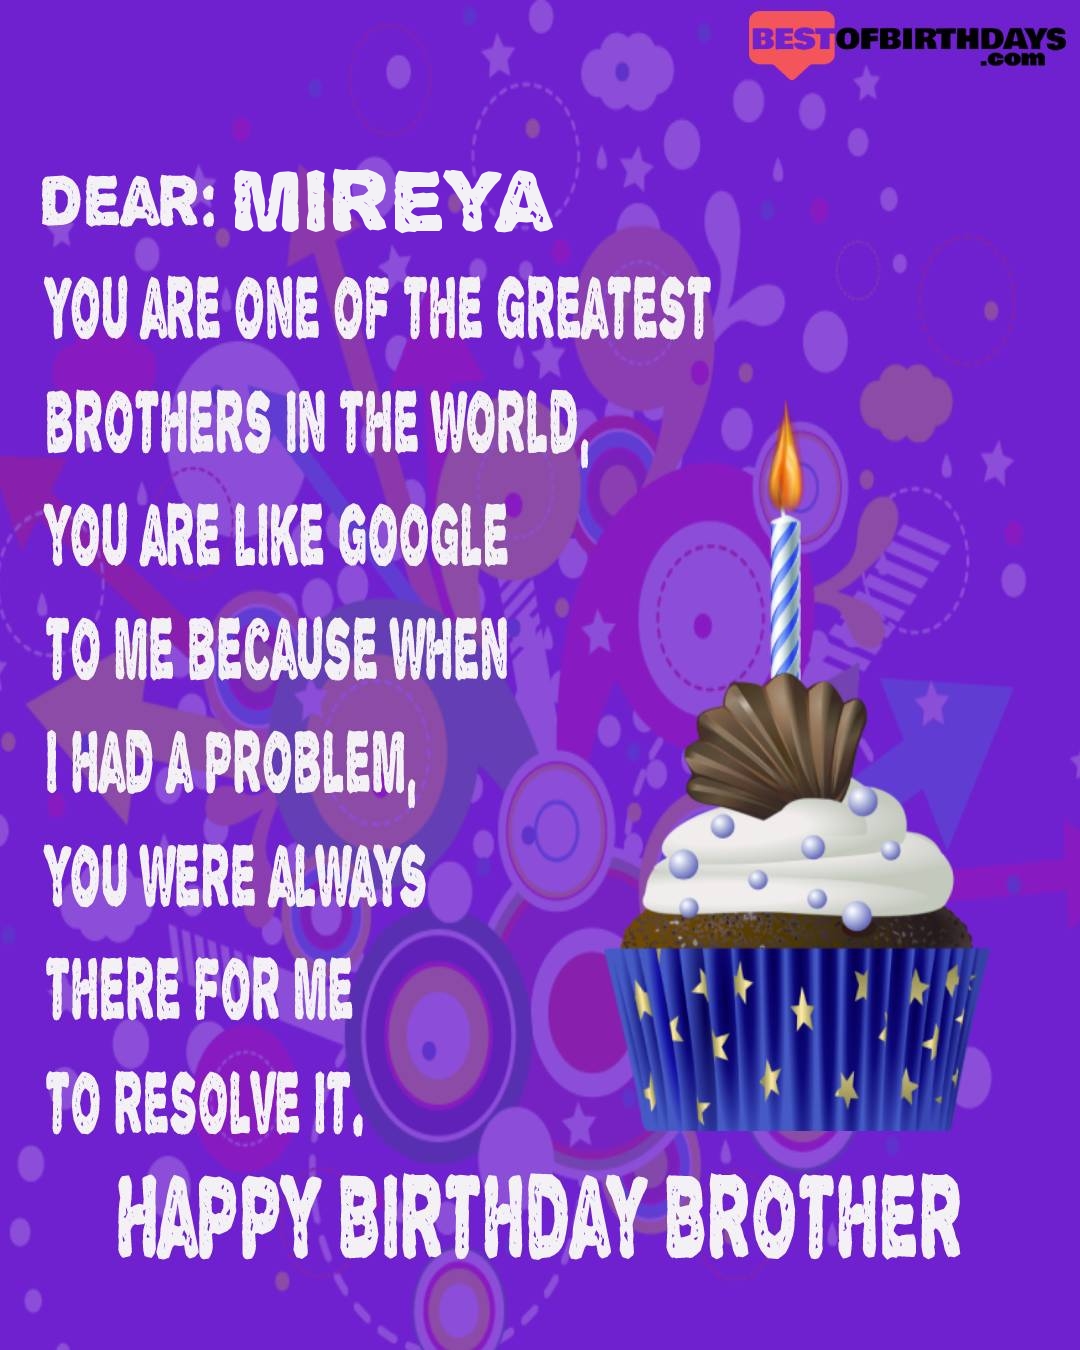 Happy birthday mireya bhai brother bro